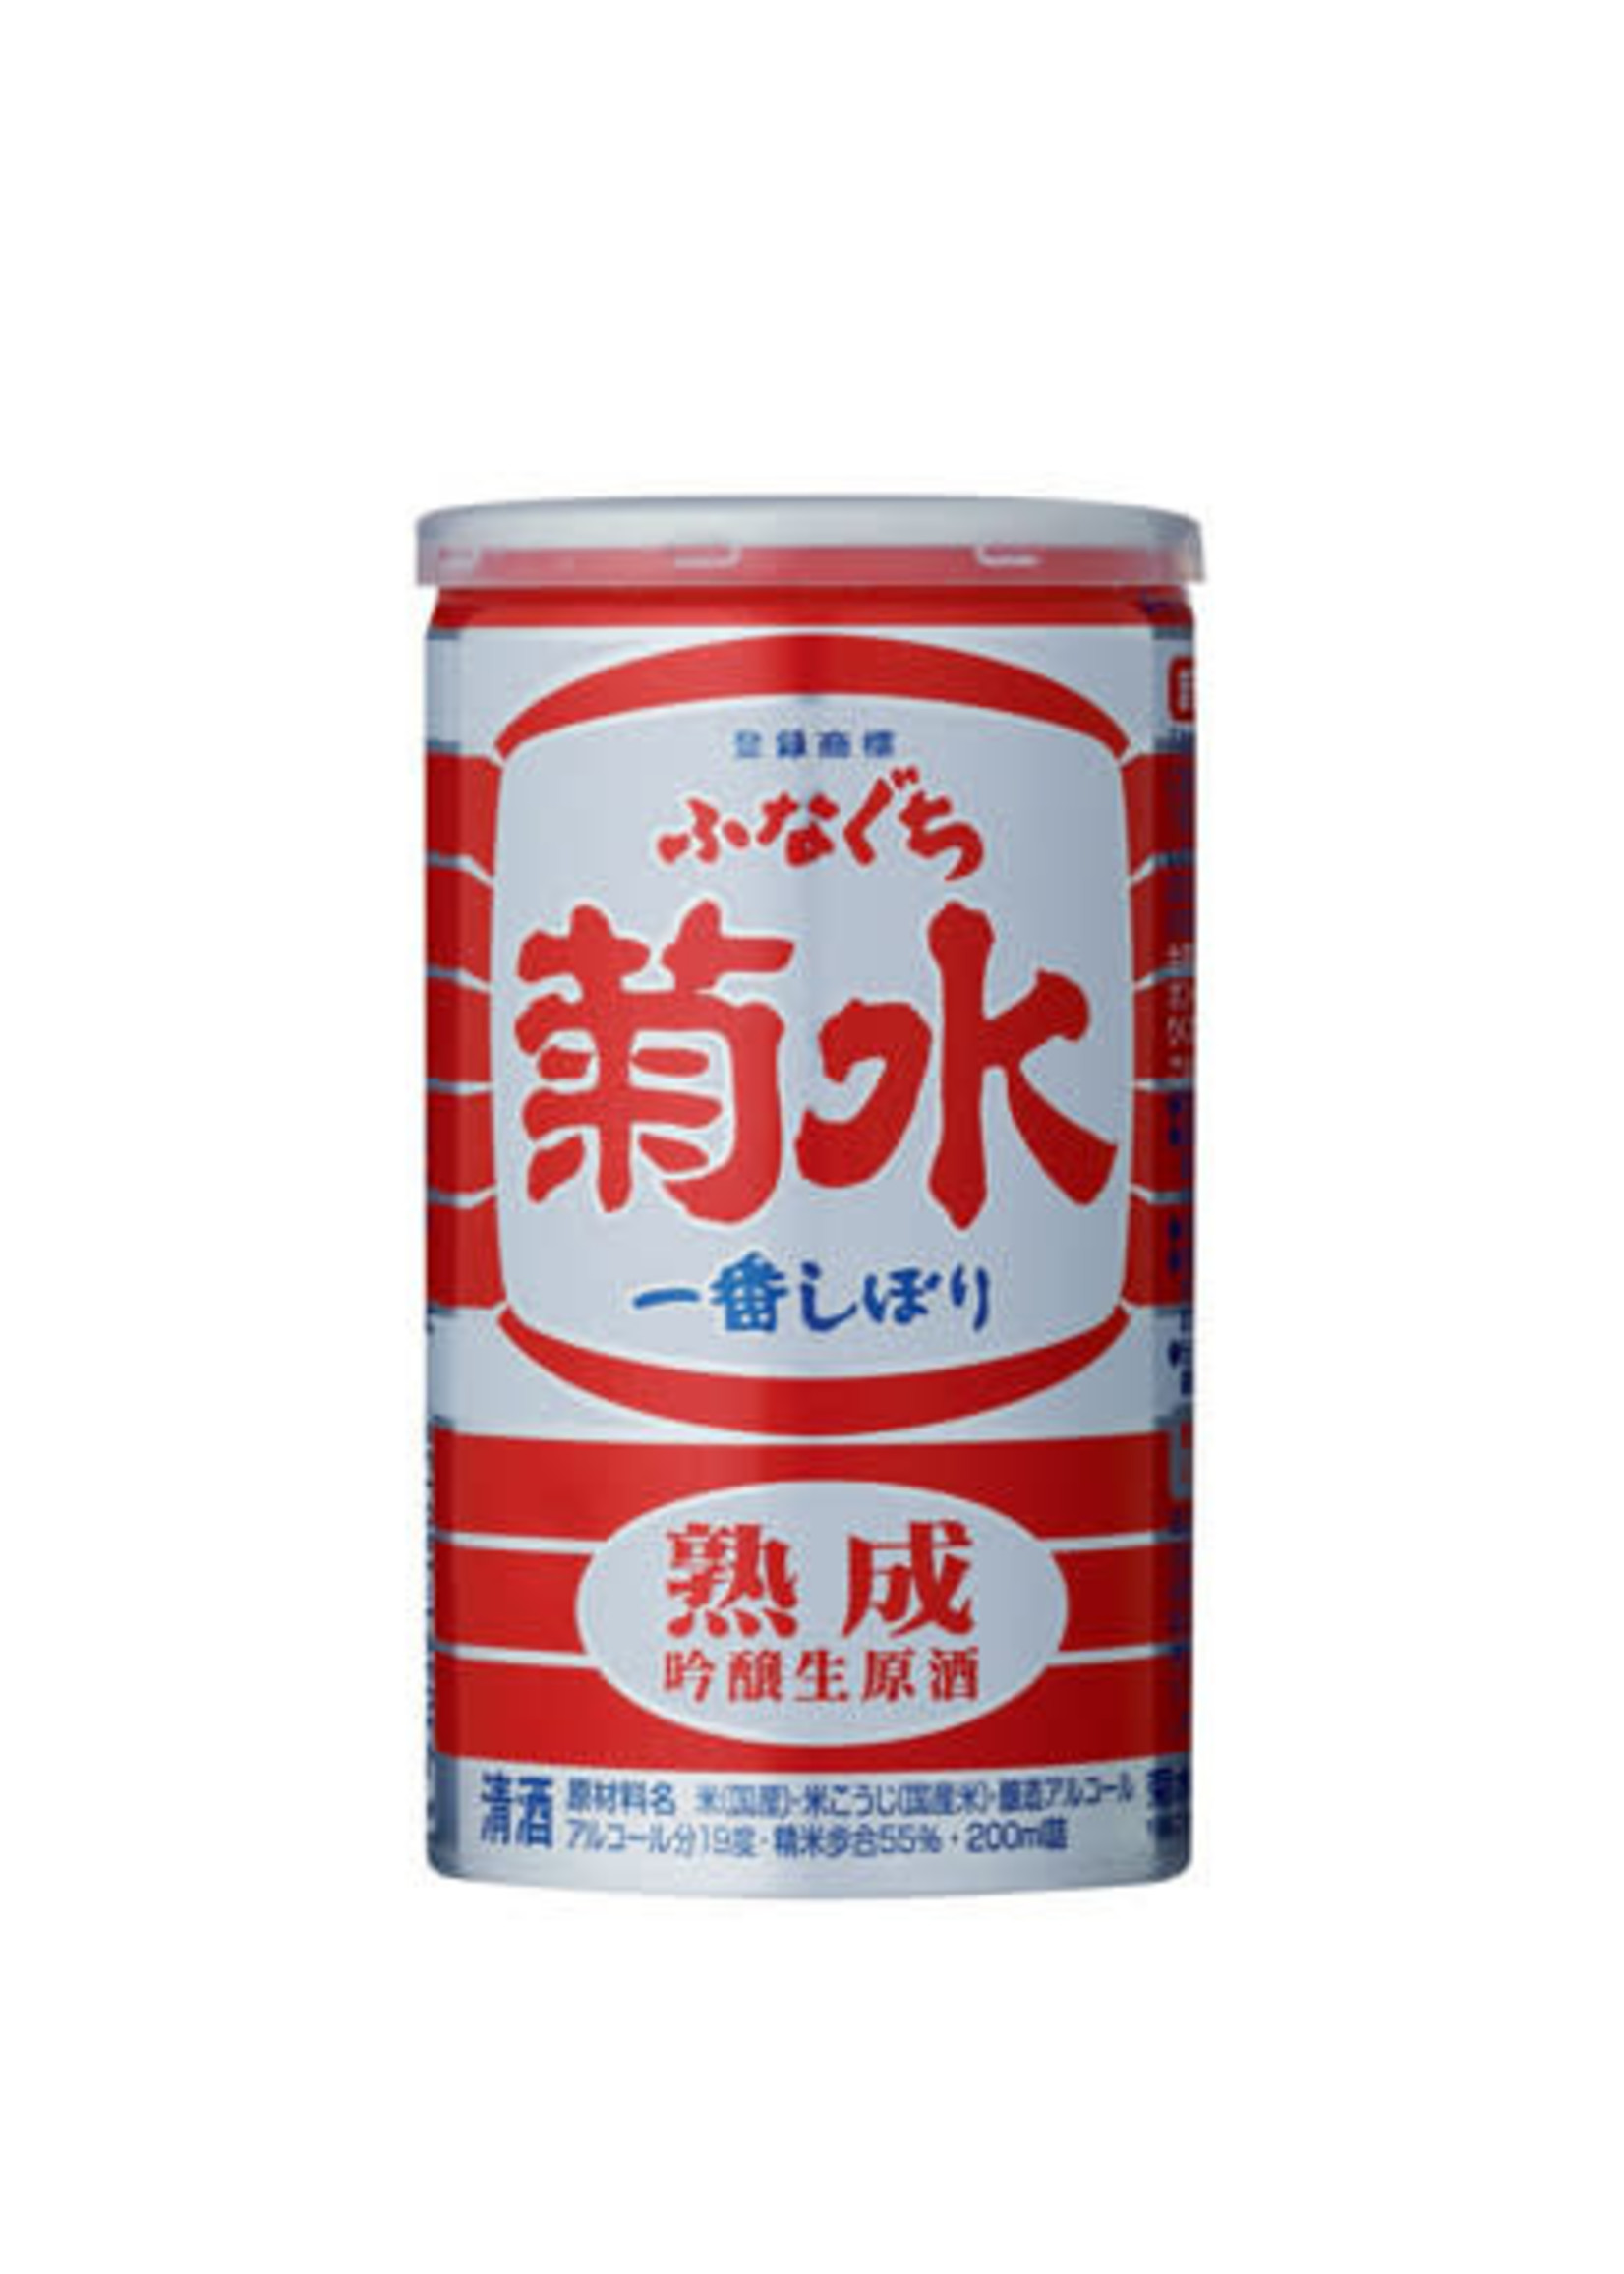 Sake Can - Funaguchi Aged Red Can